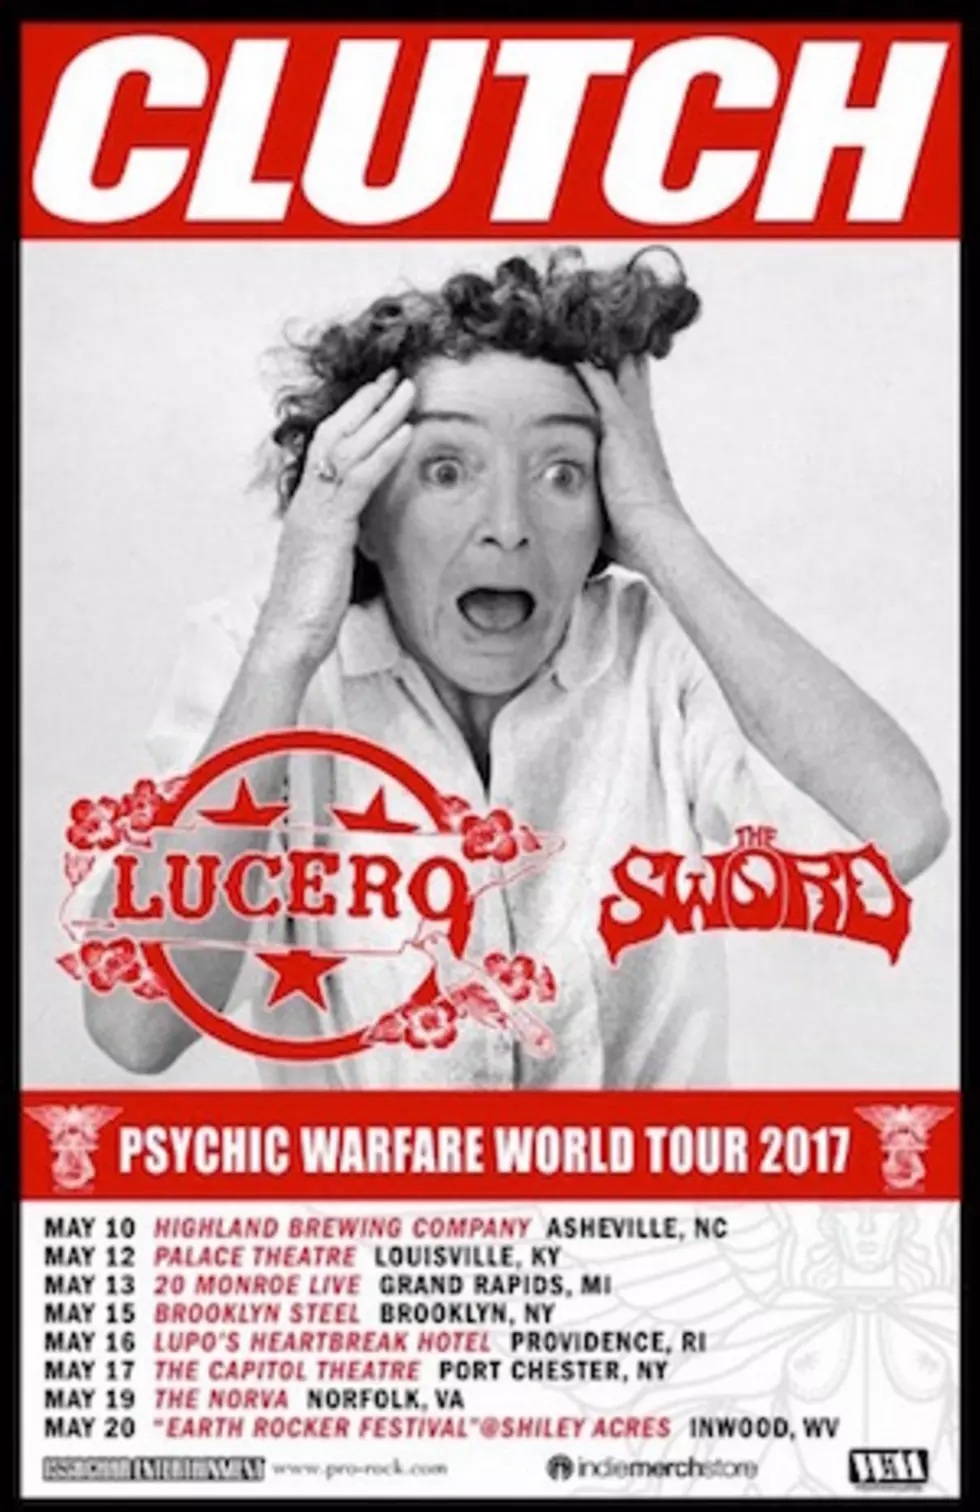 Clutch Announce U.S. Tour Dates, Plan Earth Rocker Festival